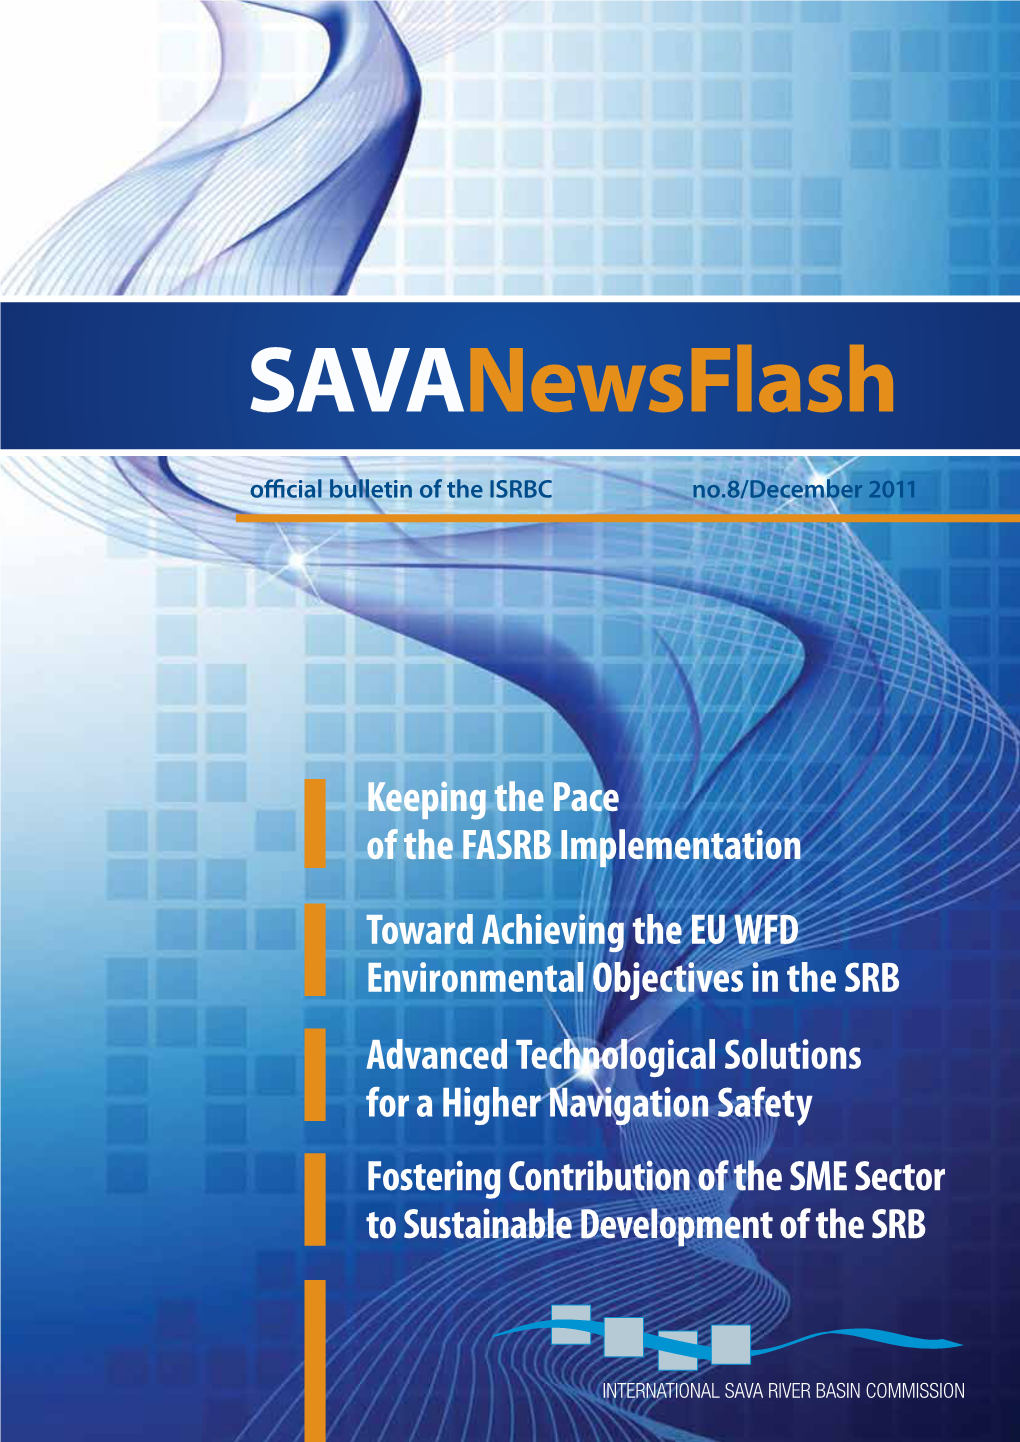 Savanewsflash Official Bulletin of the ISRBC No.8/December 2011